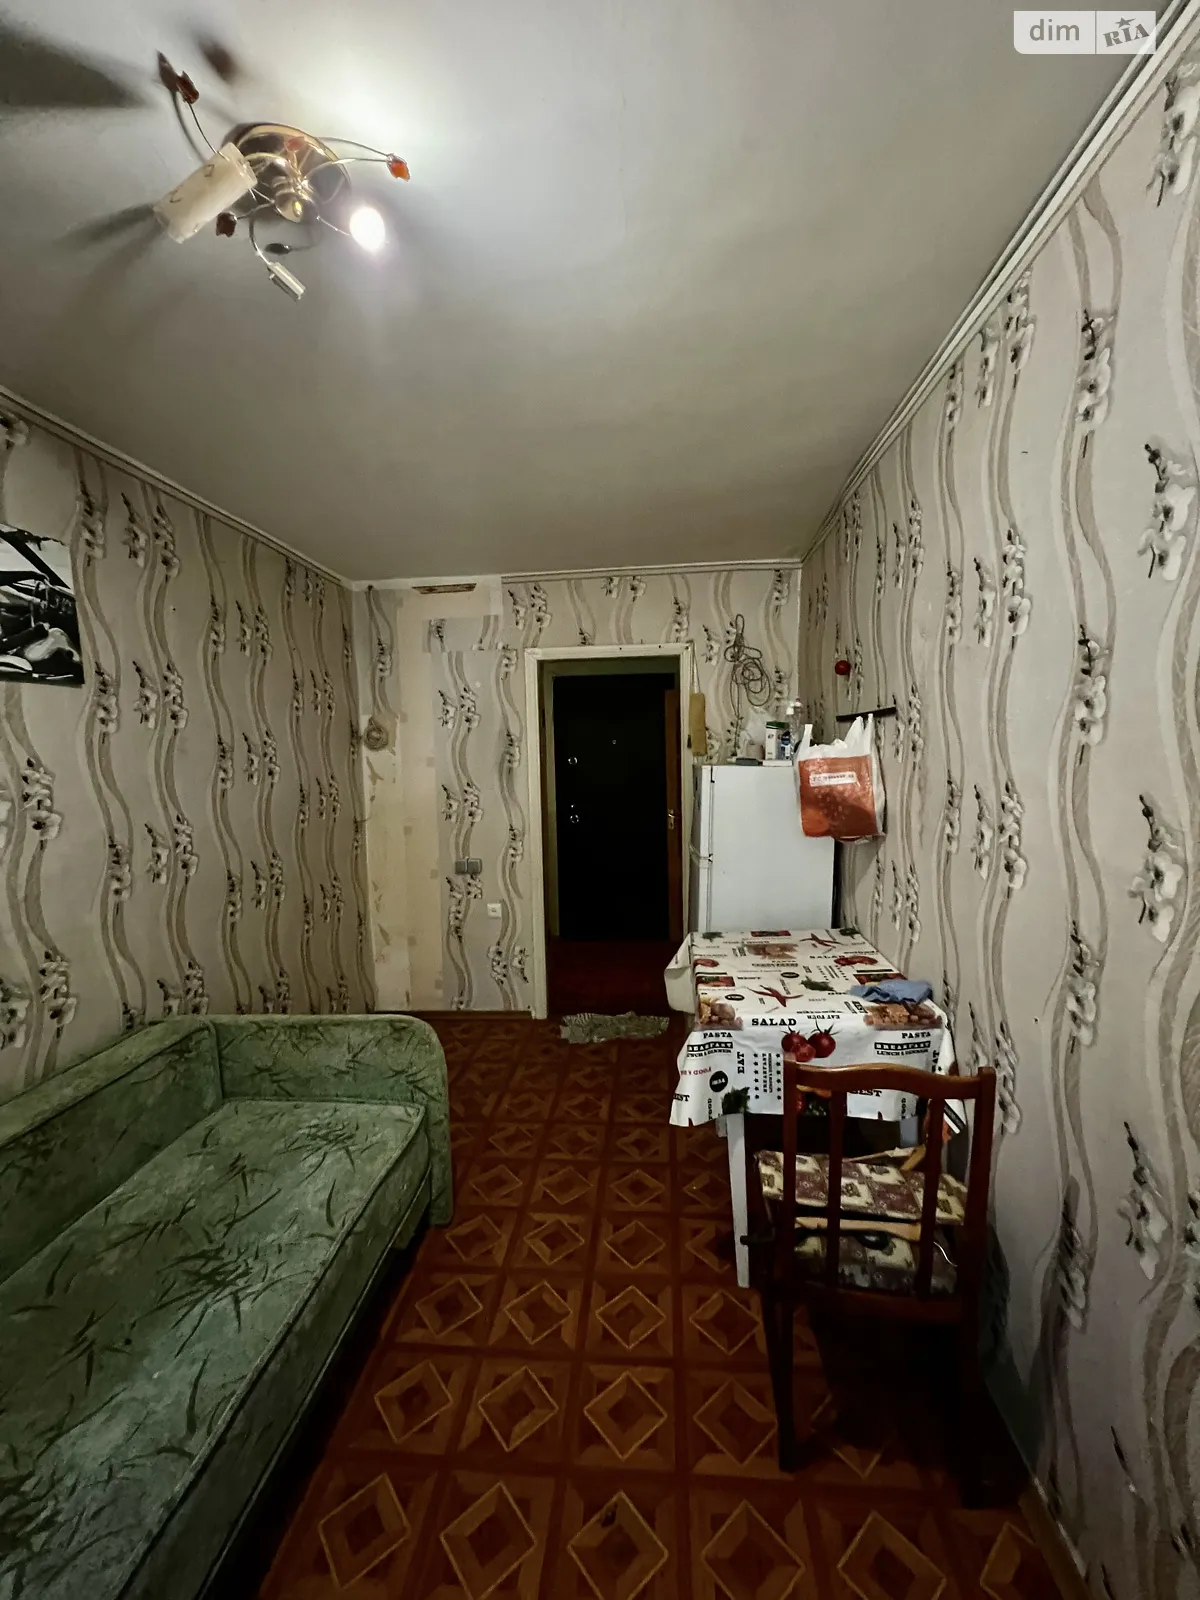 Продается комната 10 кв. м в Одессе, цена: 6500 $ - фото 1